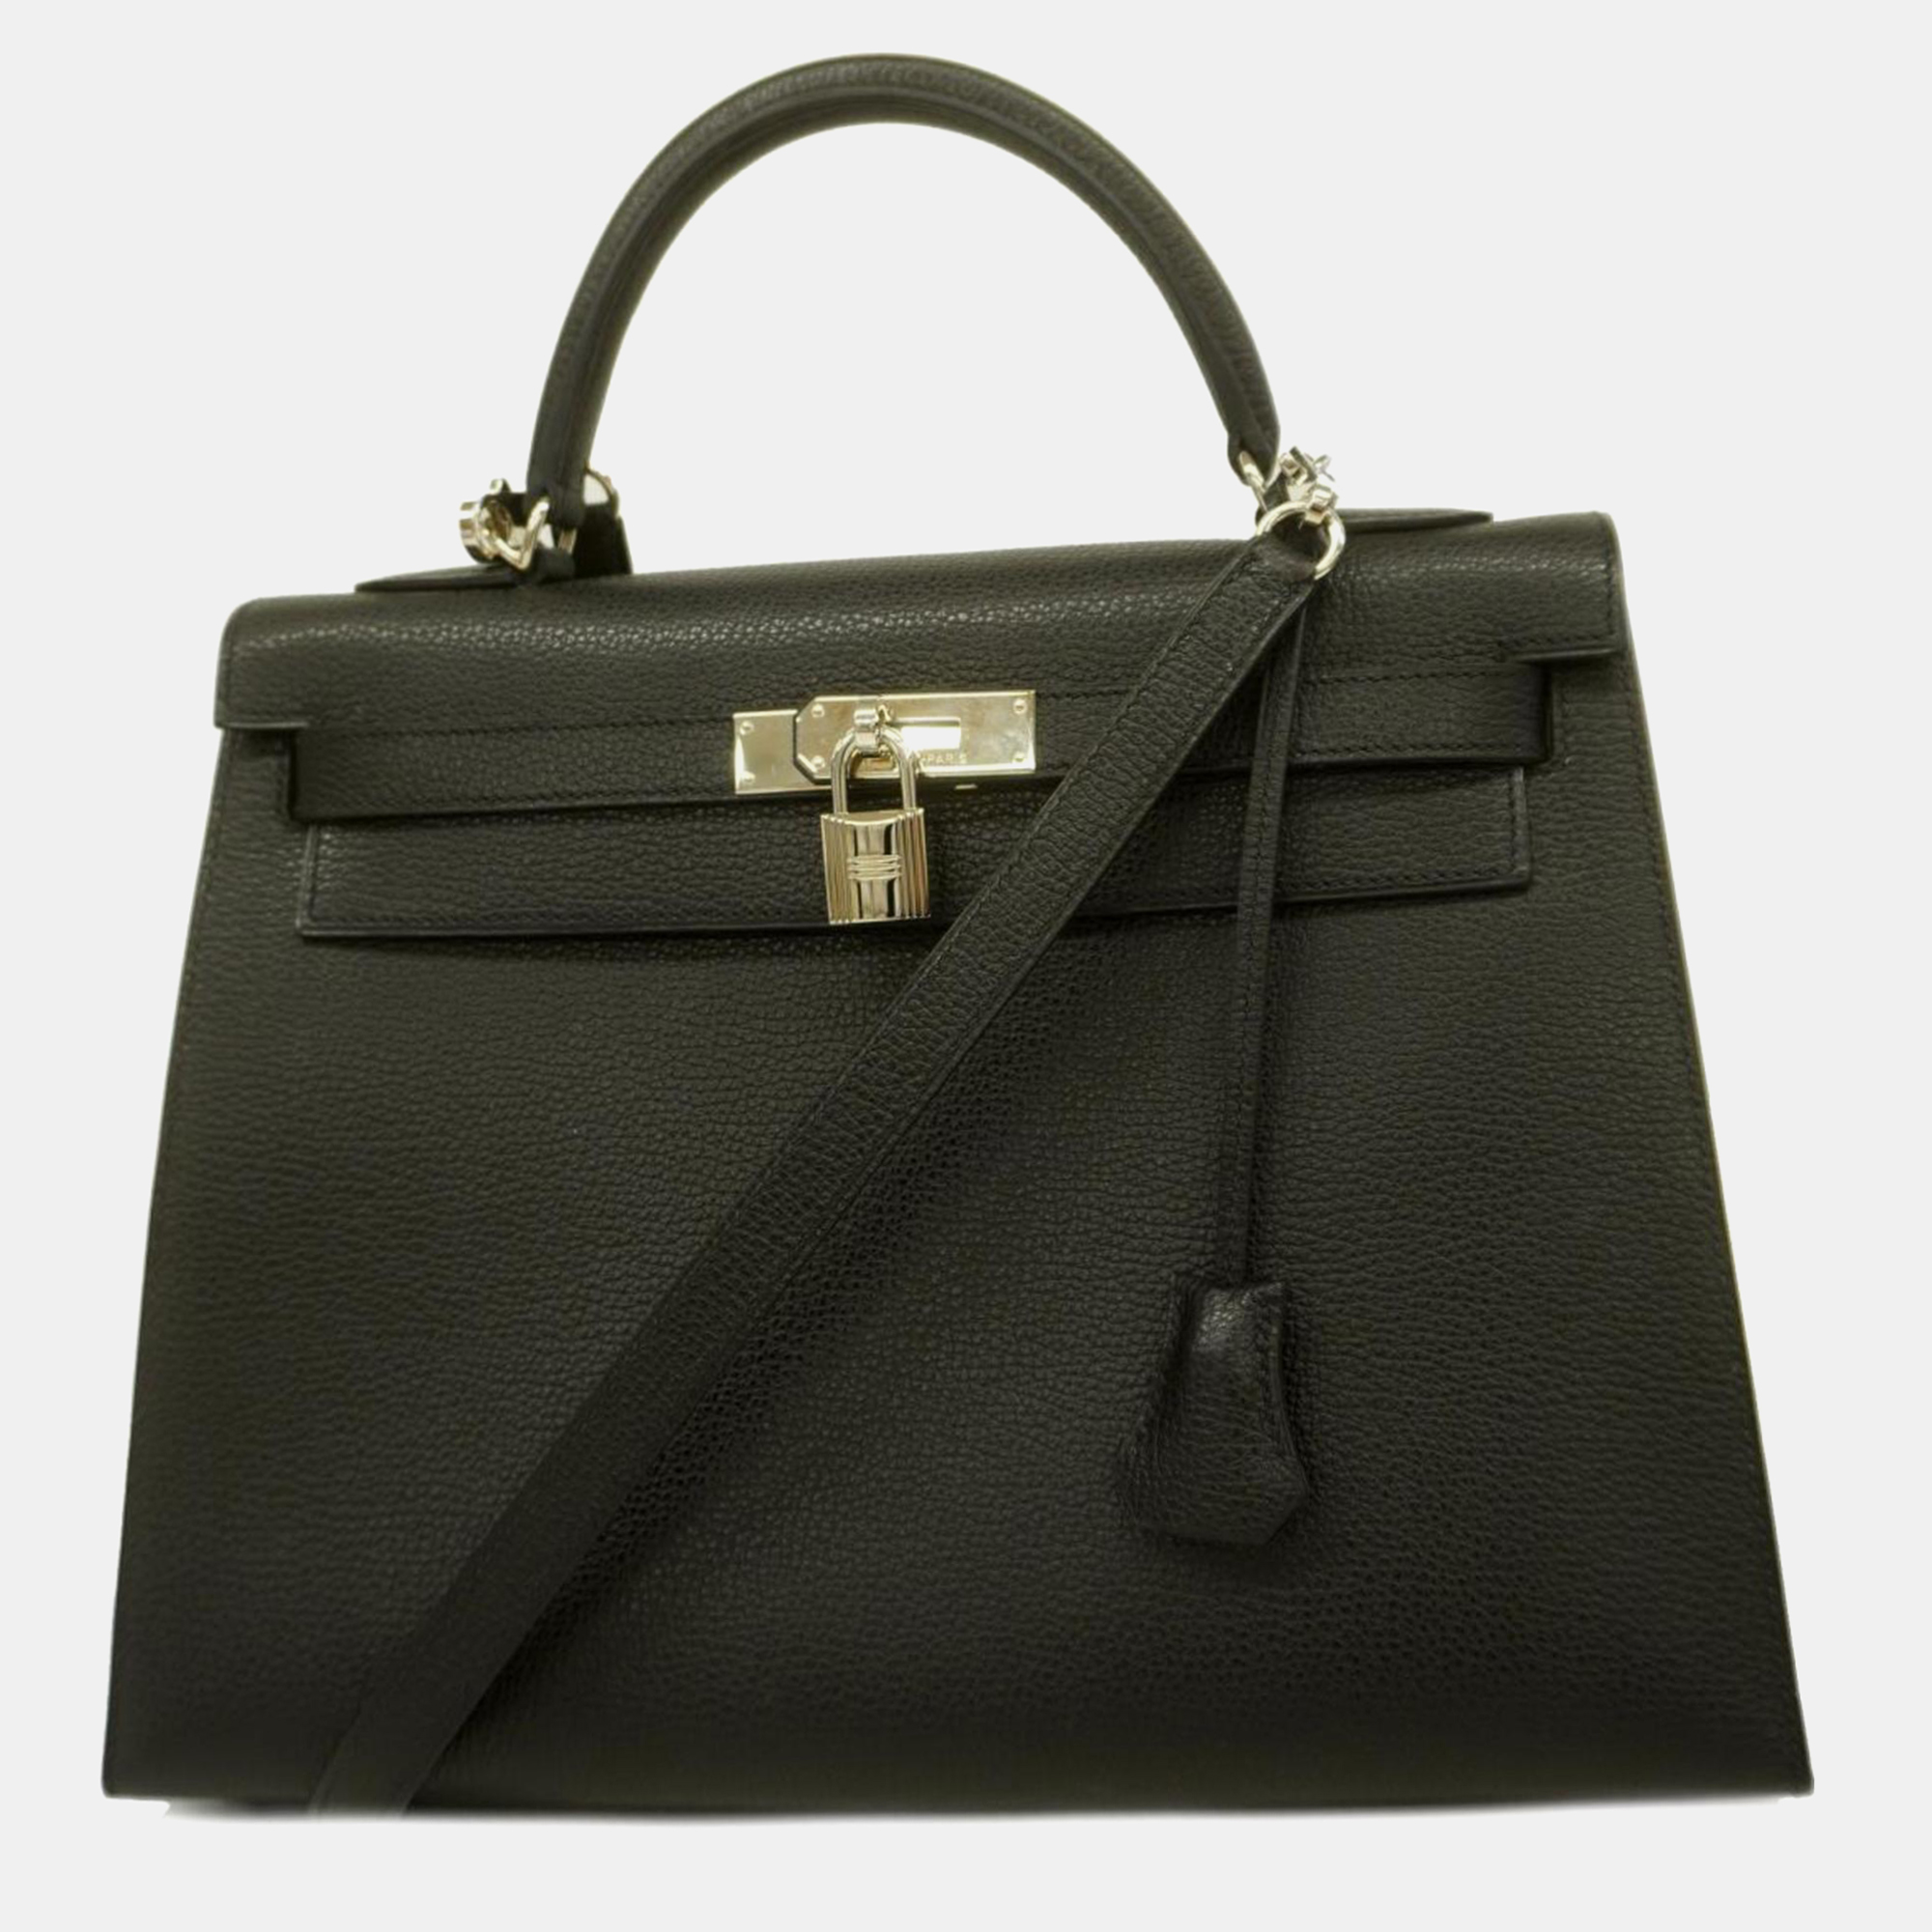 Hermes black epsom leather kelly 32 tote bag